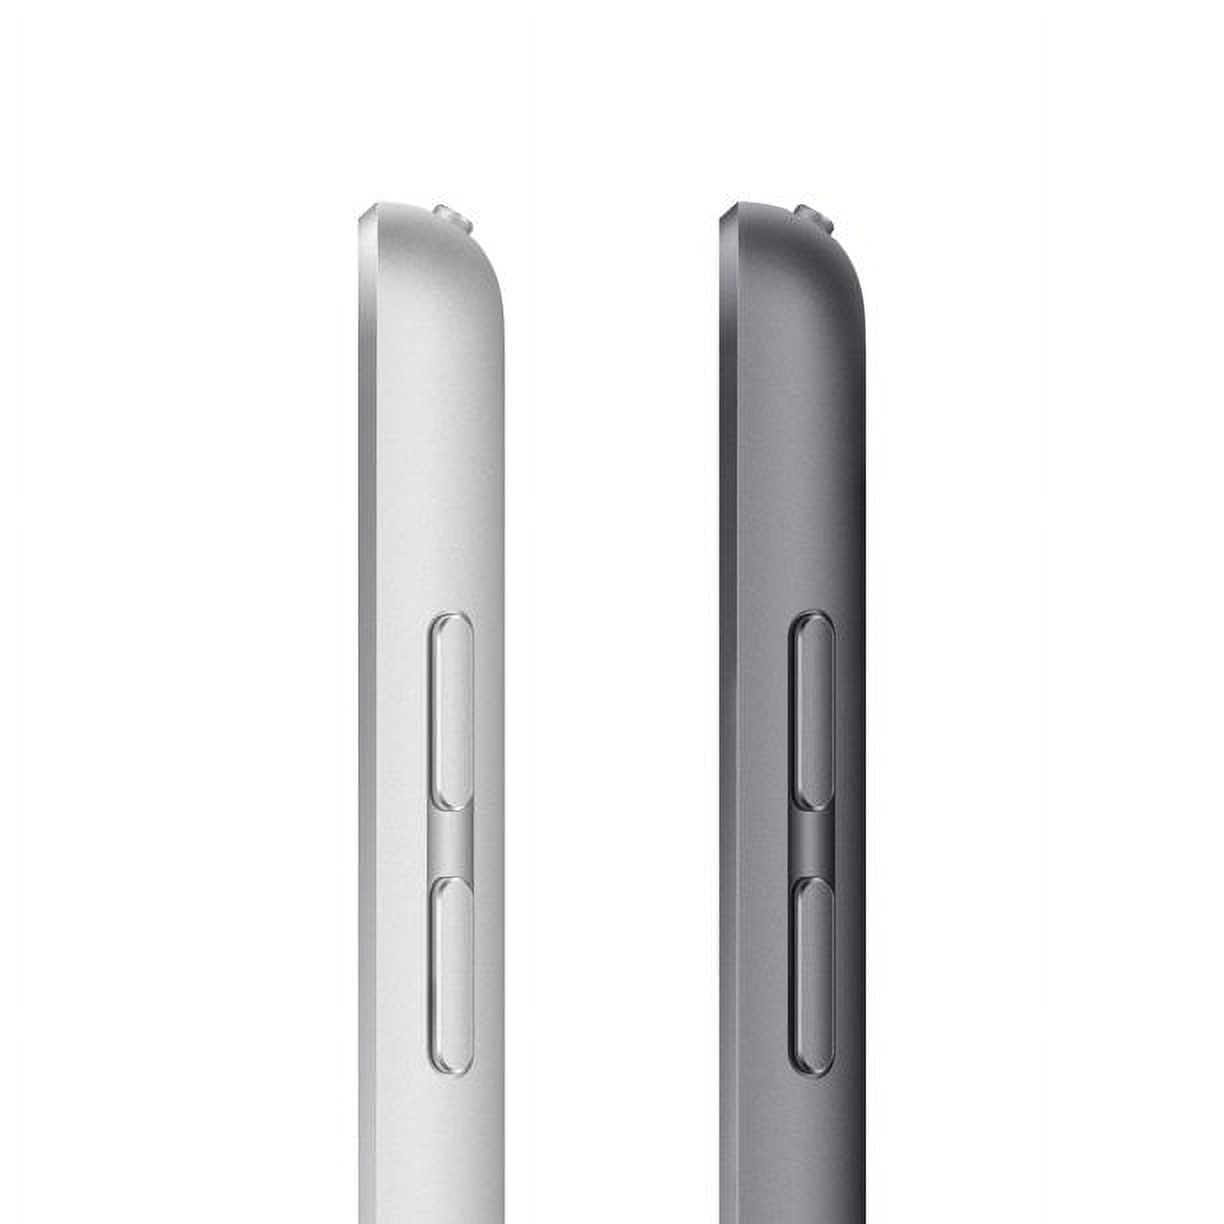 2021 Apple 10.2-inch iPad Wi-Fi 256GB - Silver (9th Generation) - image 5 of 8